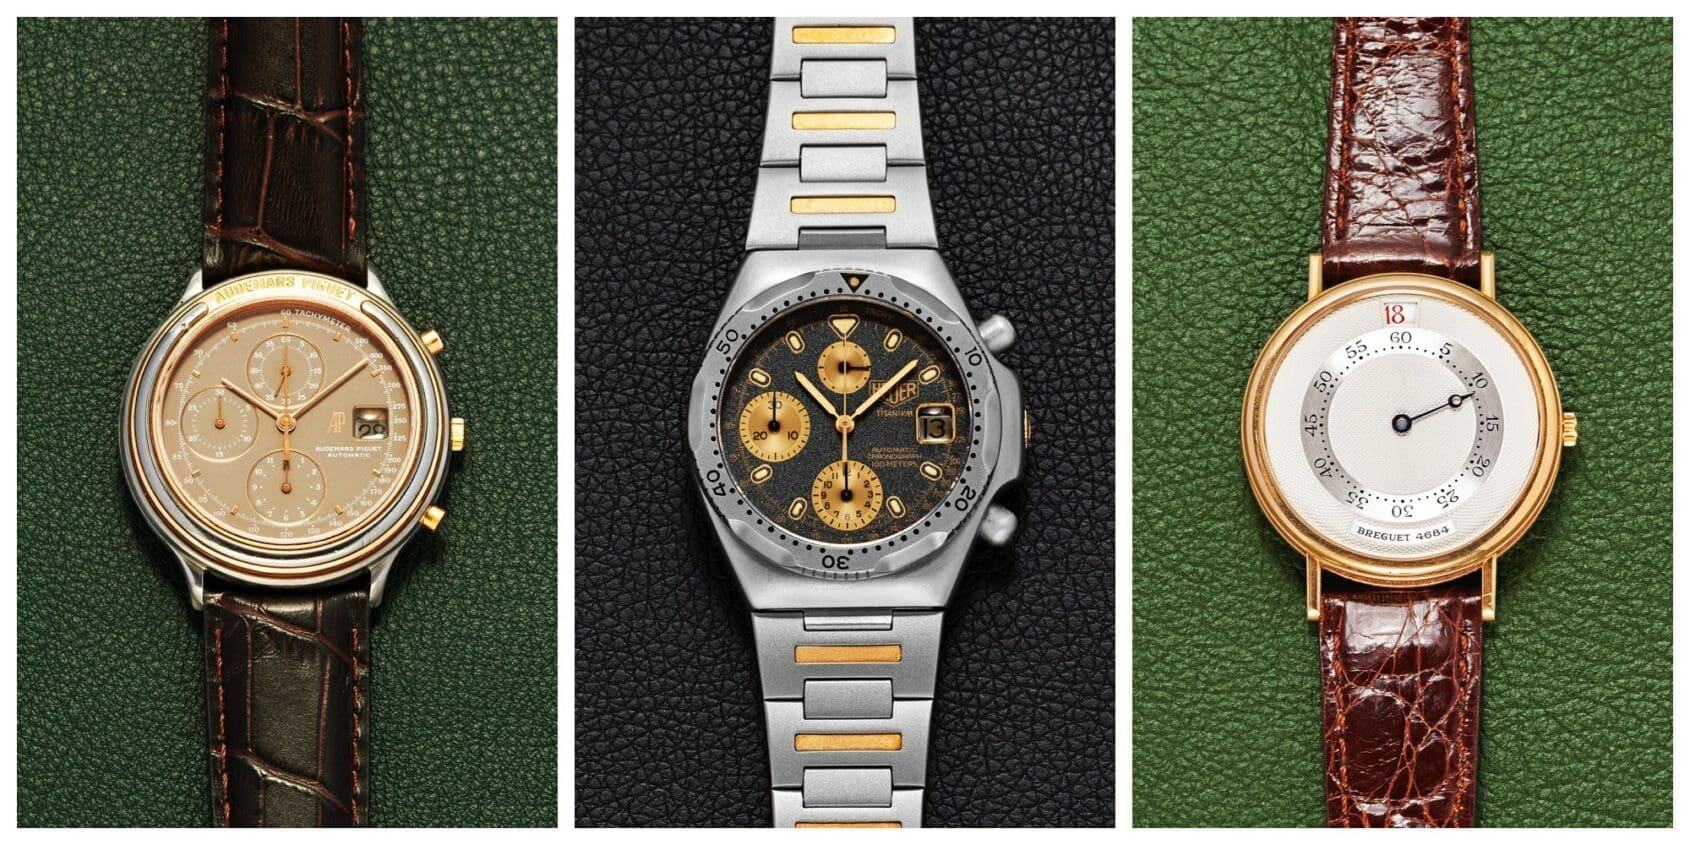 My top five picks from the Ineichen Vintage Wristwatch auction